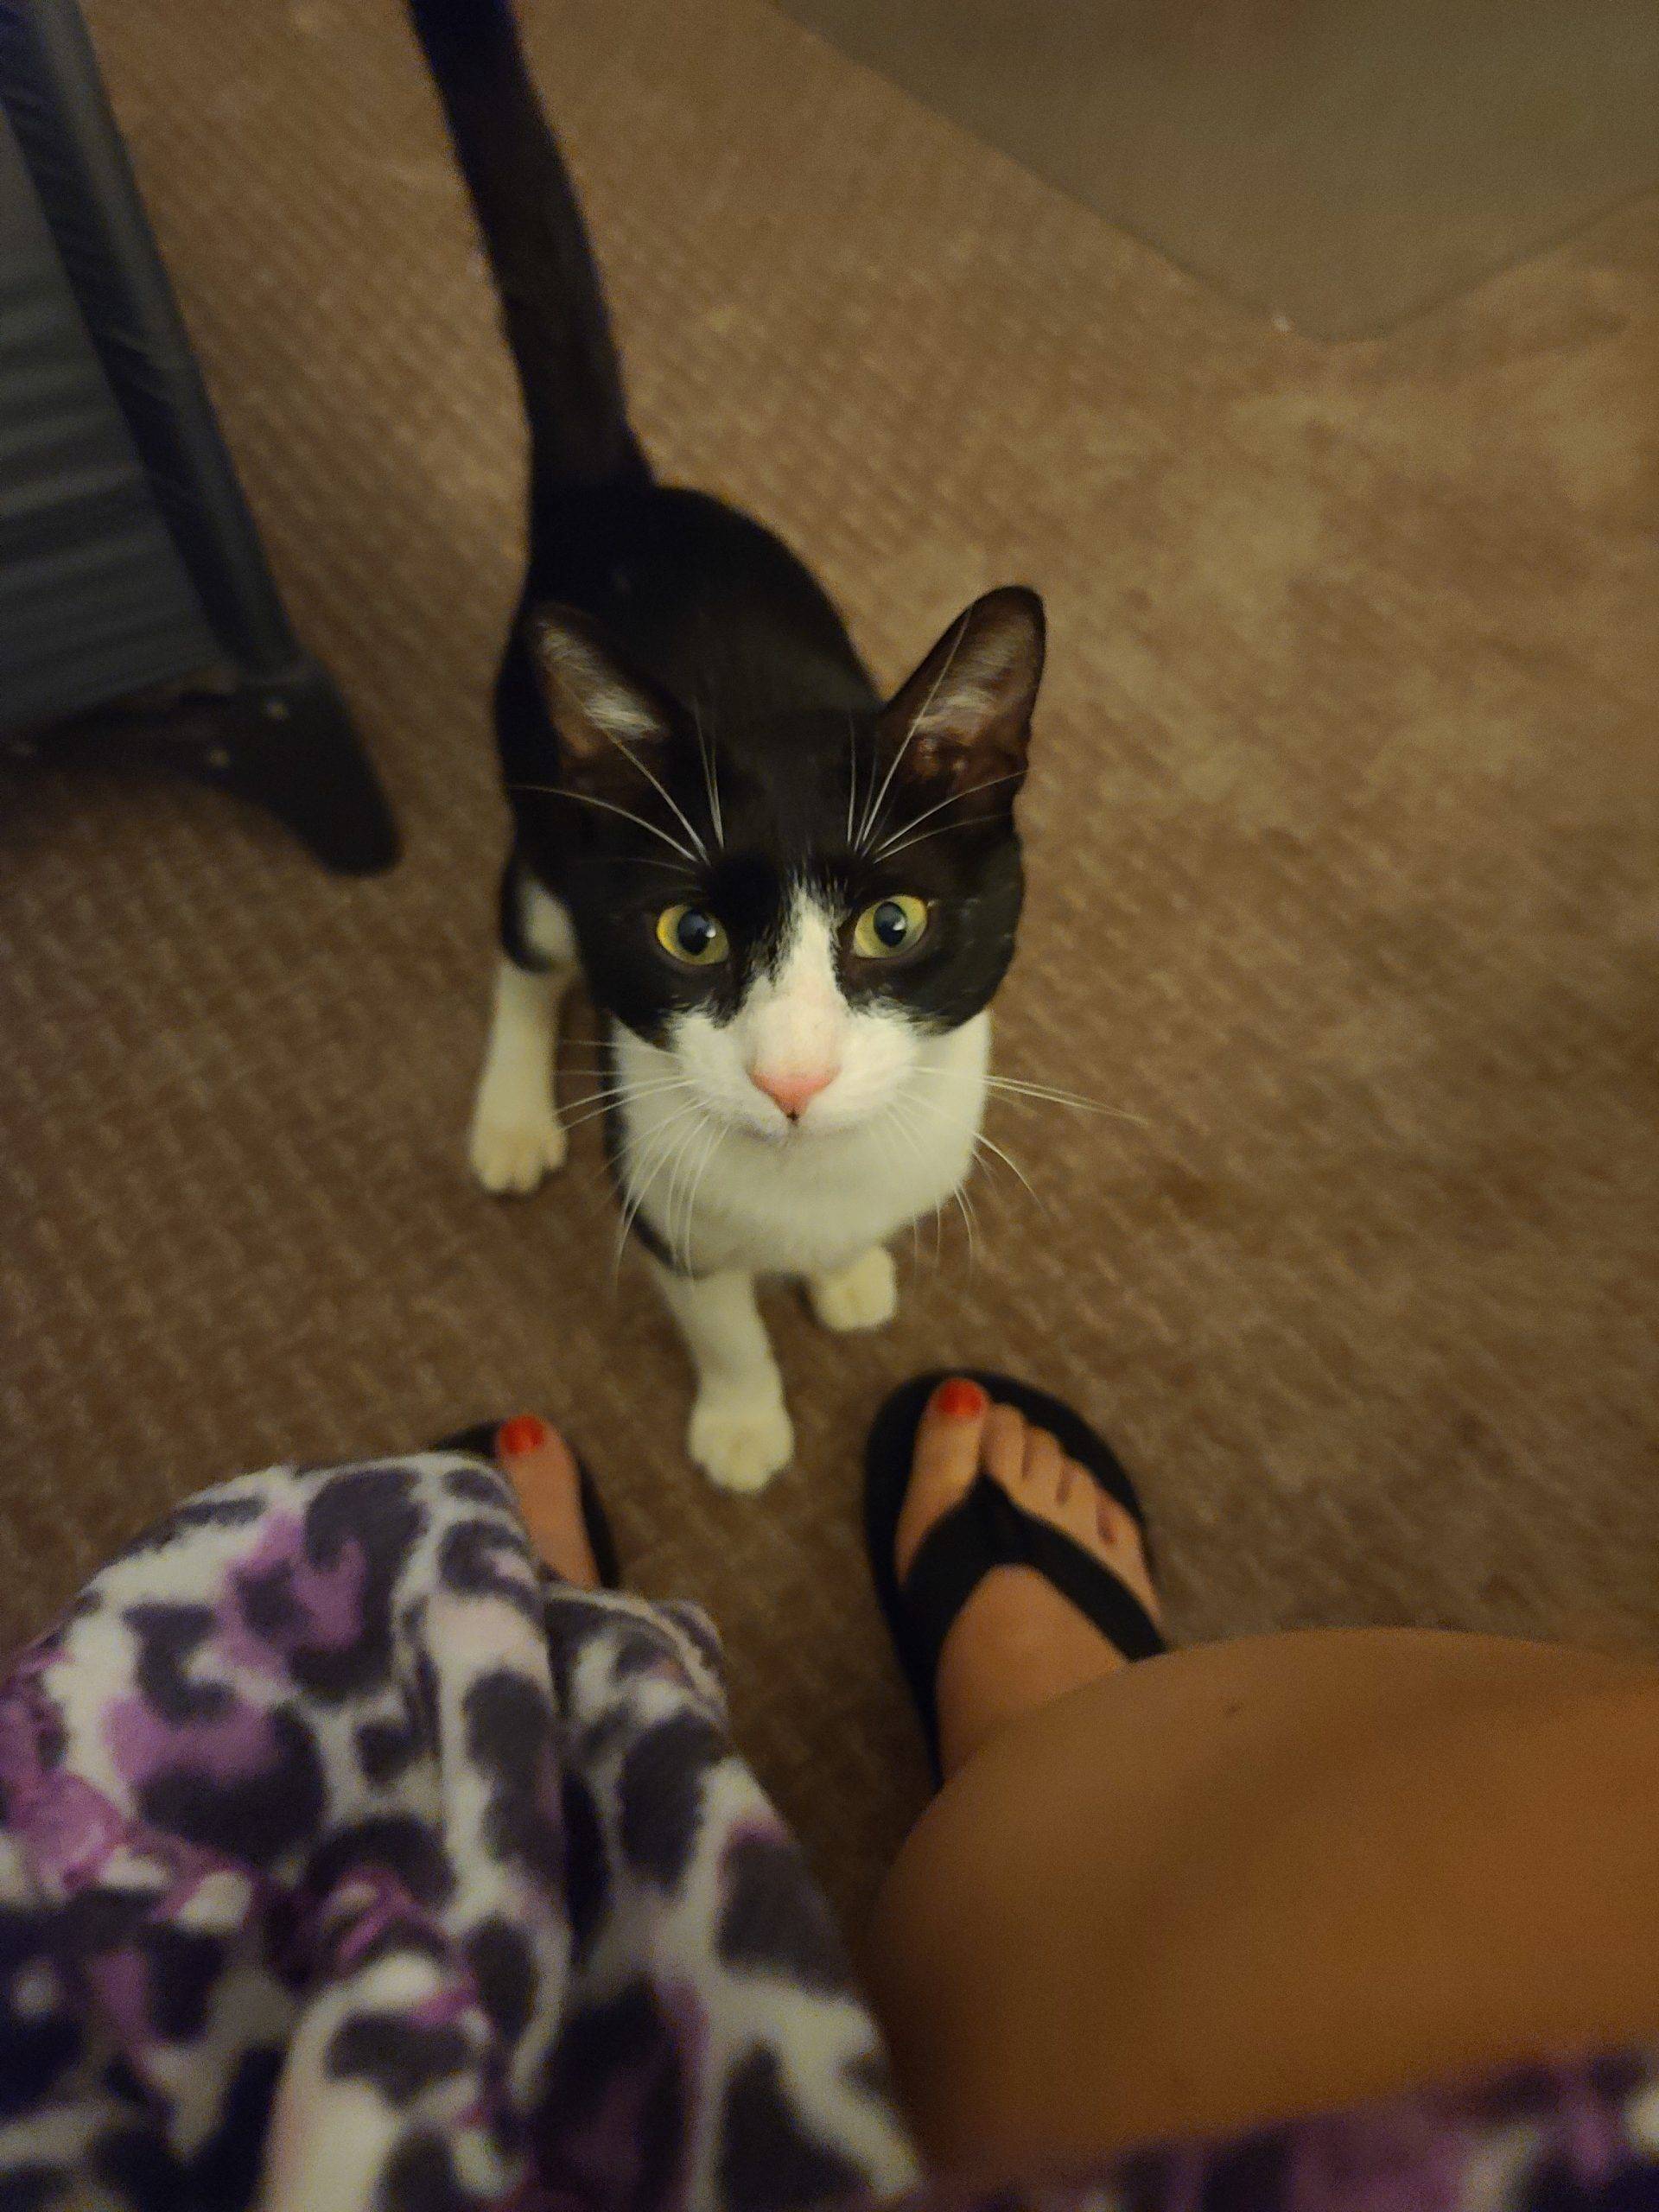 Atlanta (Acworth) GA – Cuddly Black and White Tuxedo Kitten For Adoption – Supplies Included – Adopt Sweet Seven